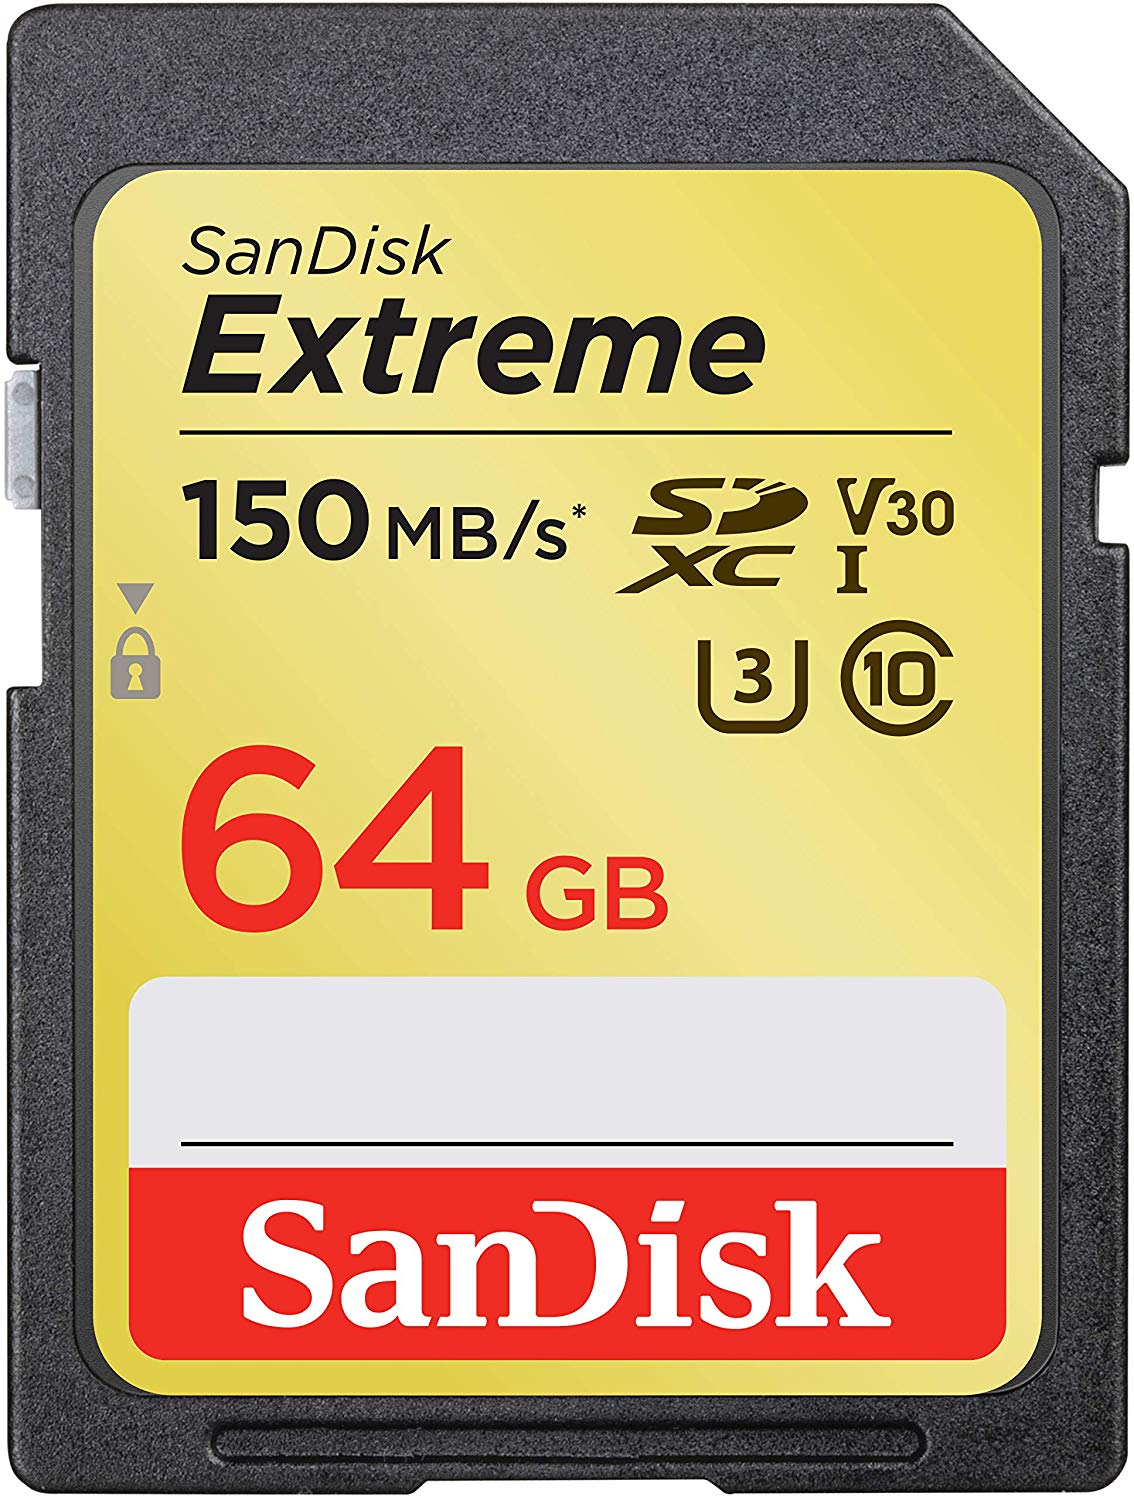 64GB Sandisk Extreme Memory Card